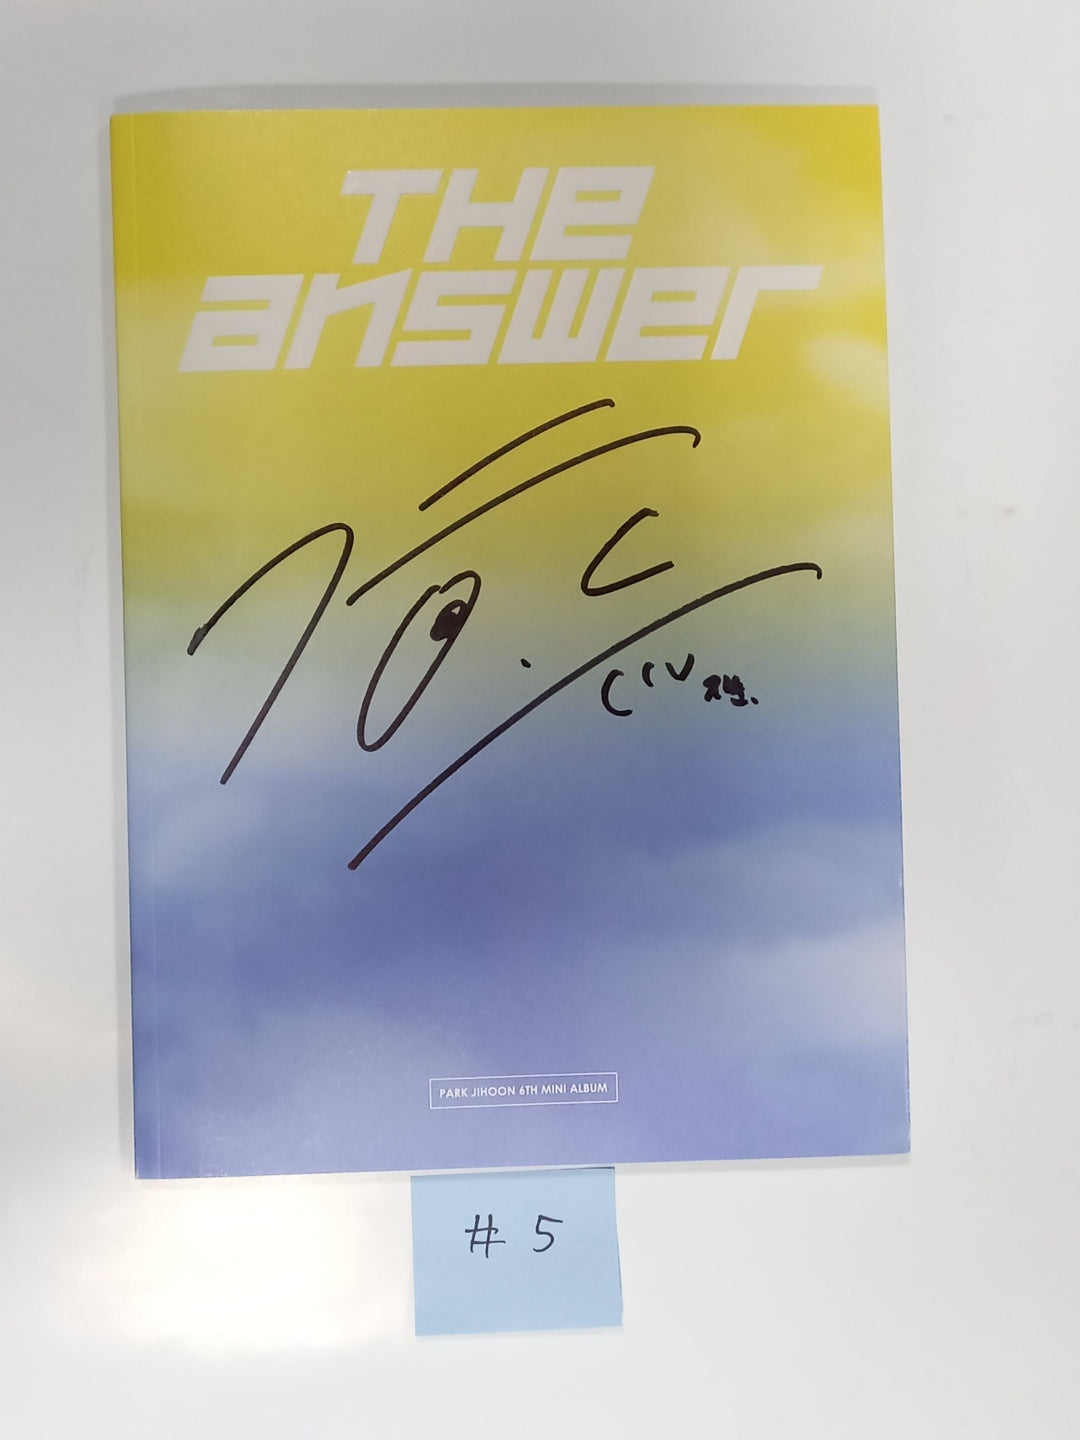 Park Ji Hoon "THE ANSWER" - Hand Autographed(Signed) Promo Album